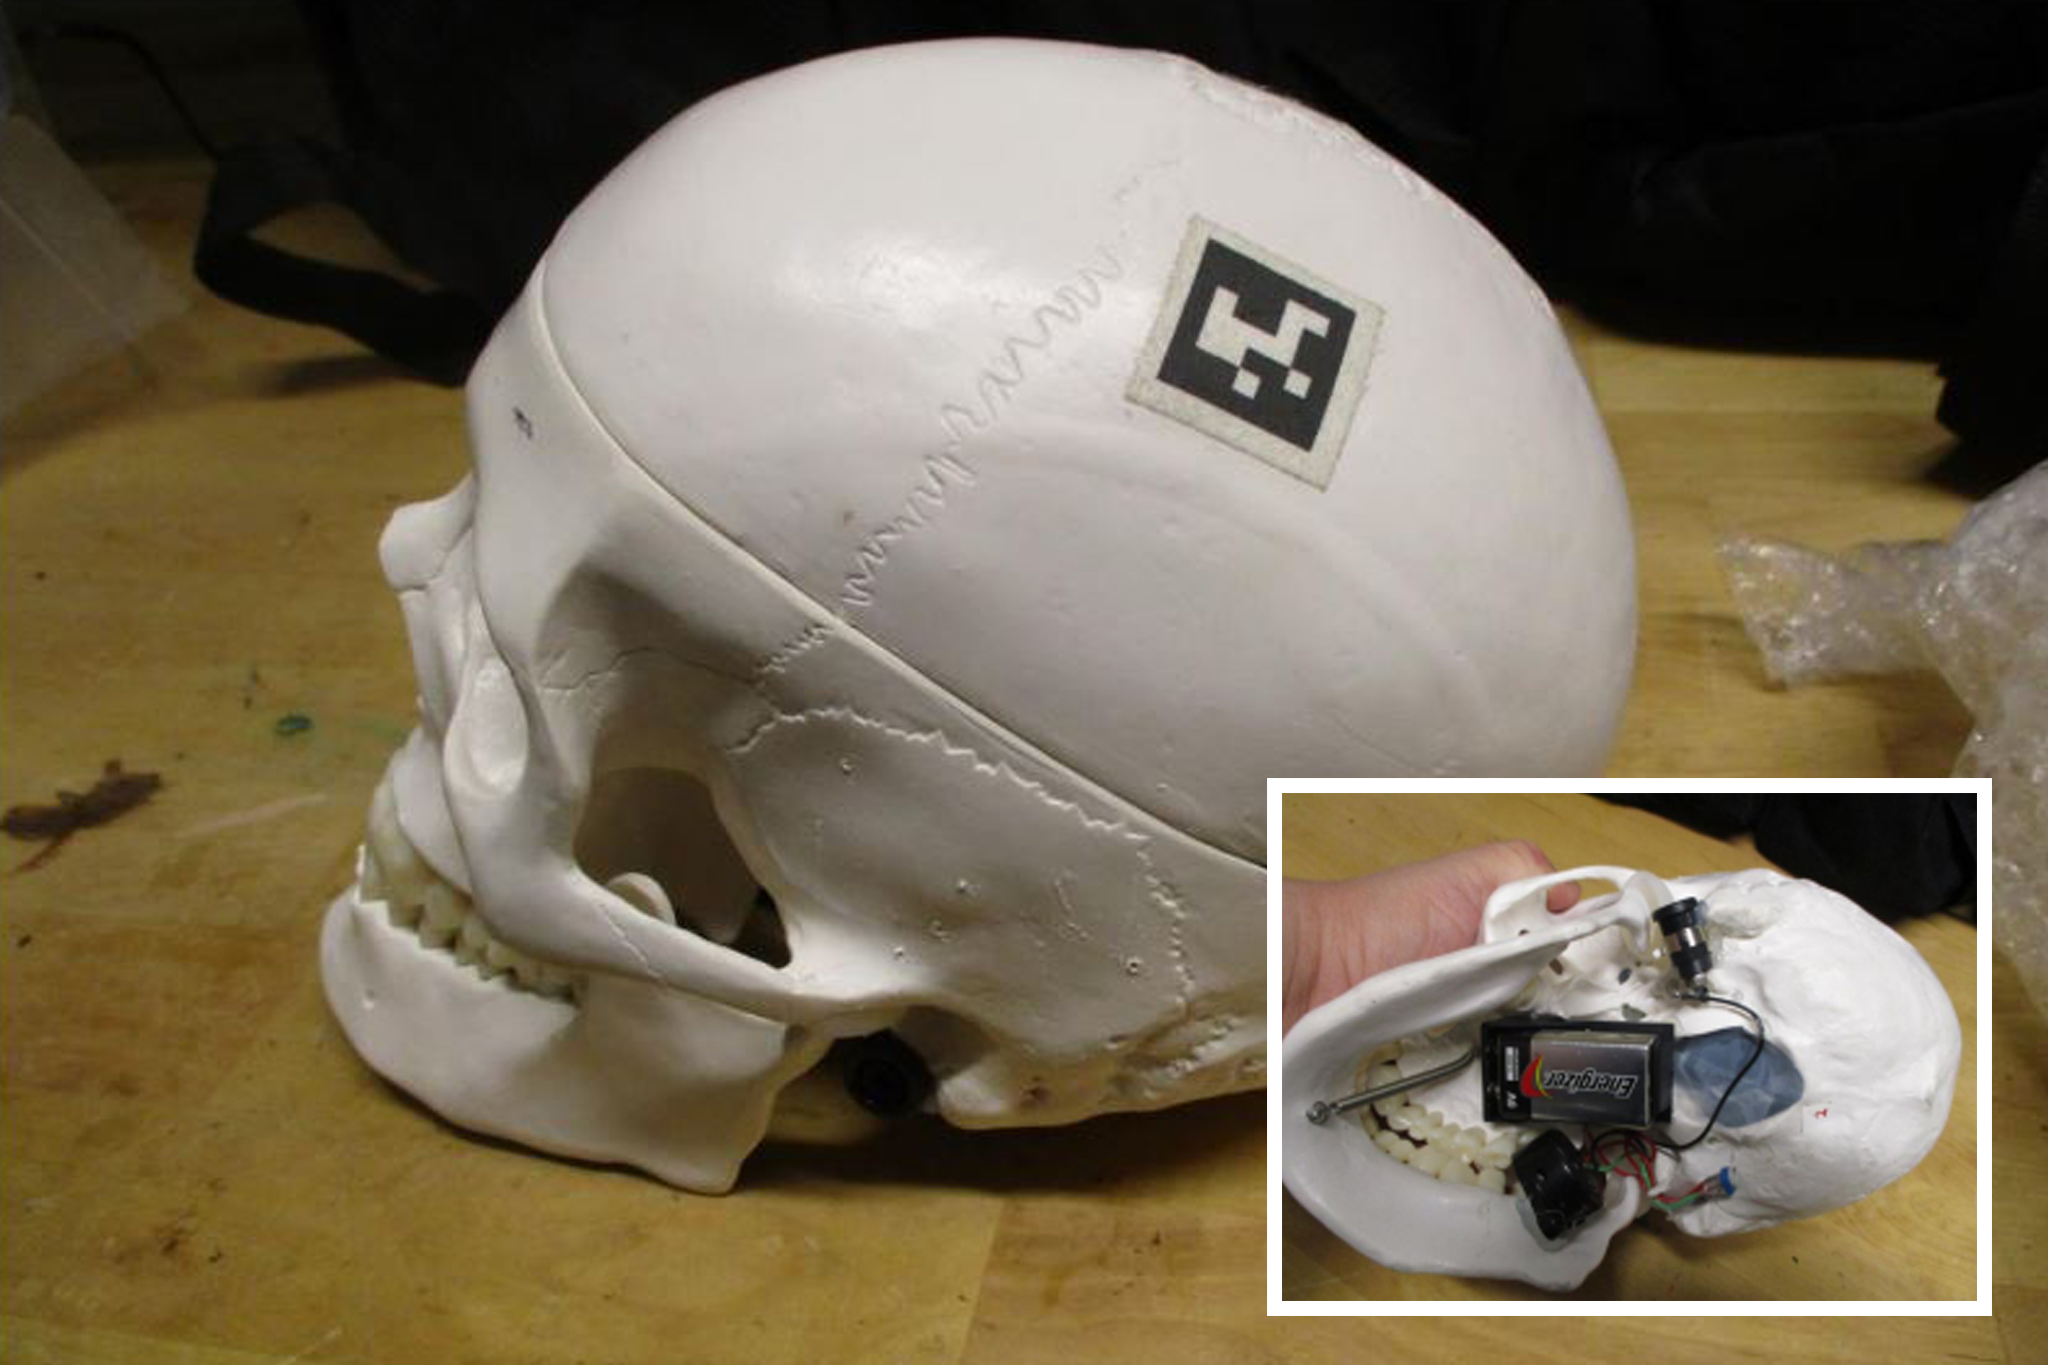 Skullduggery: The model skull triggered a security alert